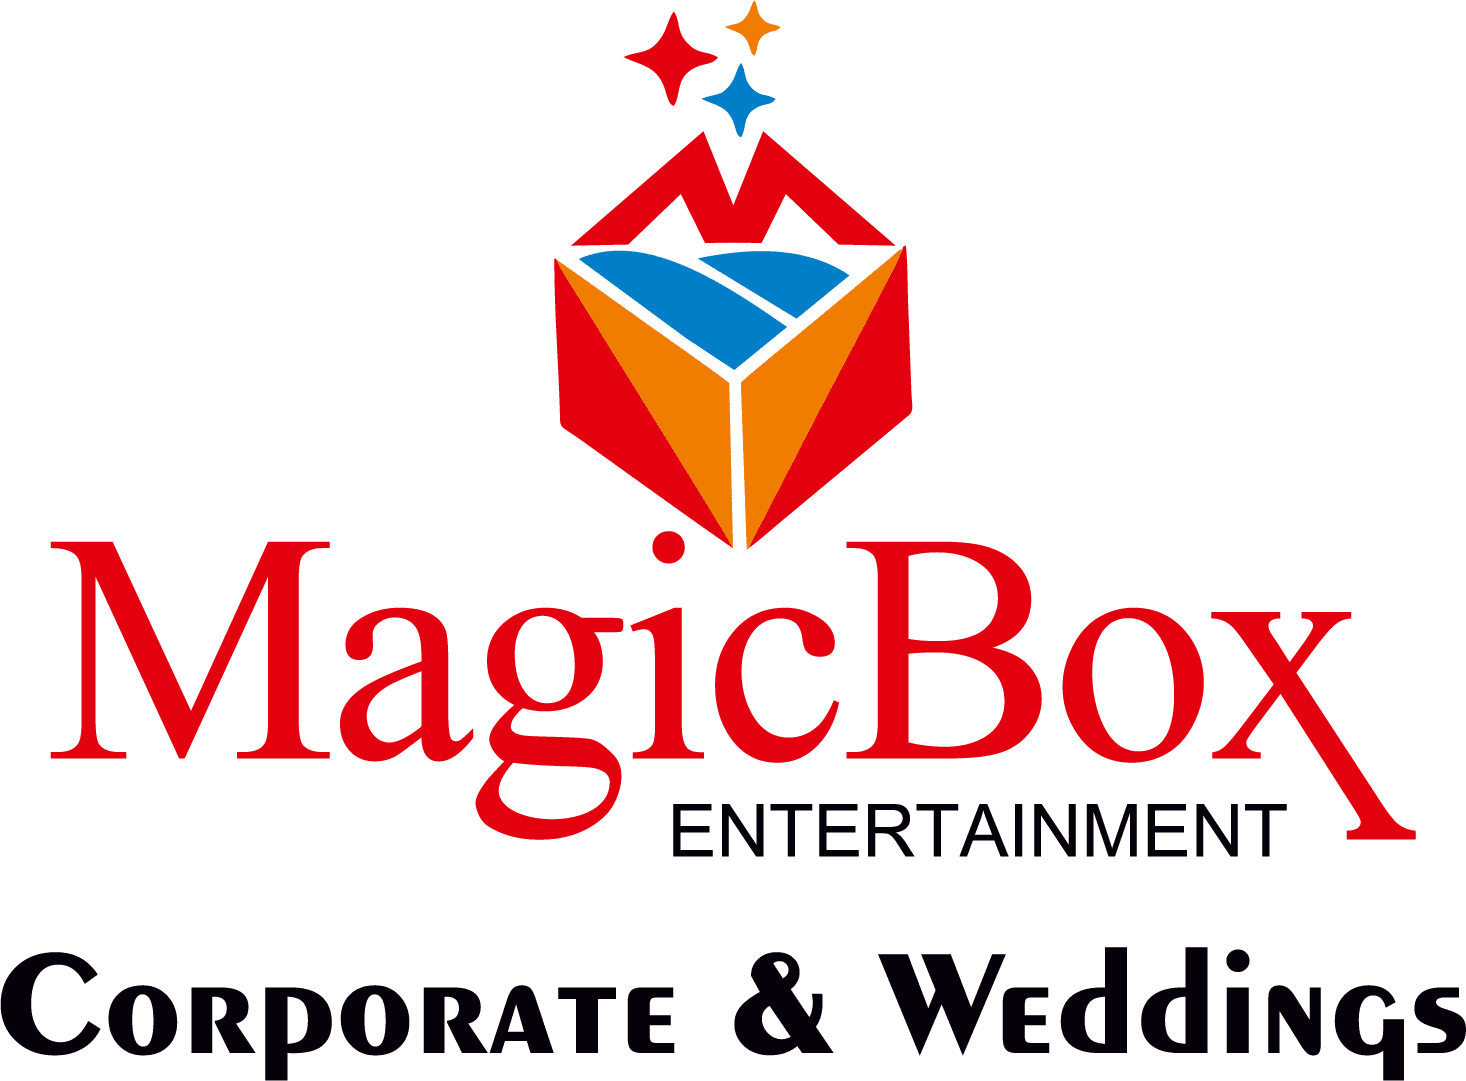 Magic Box Entertainment